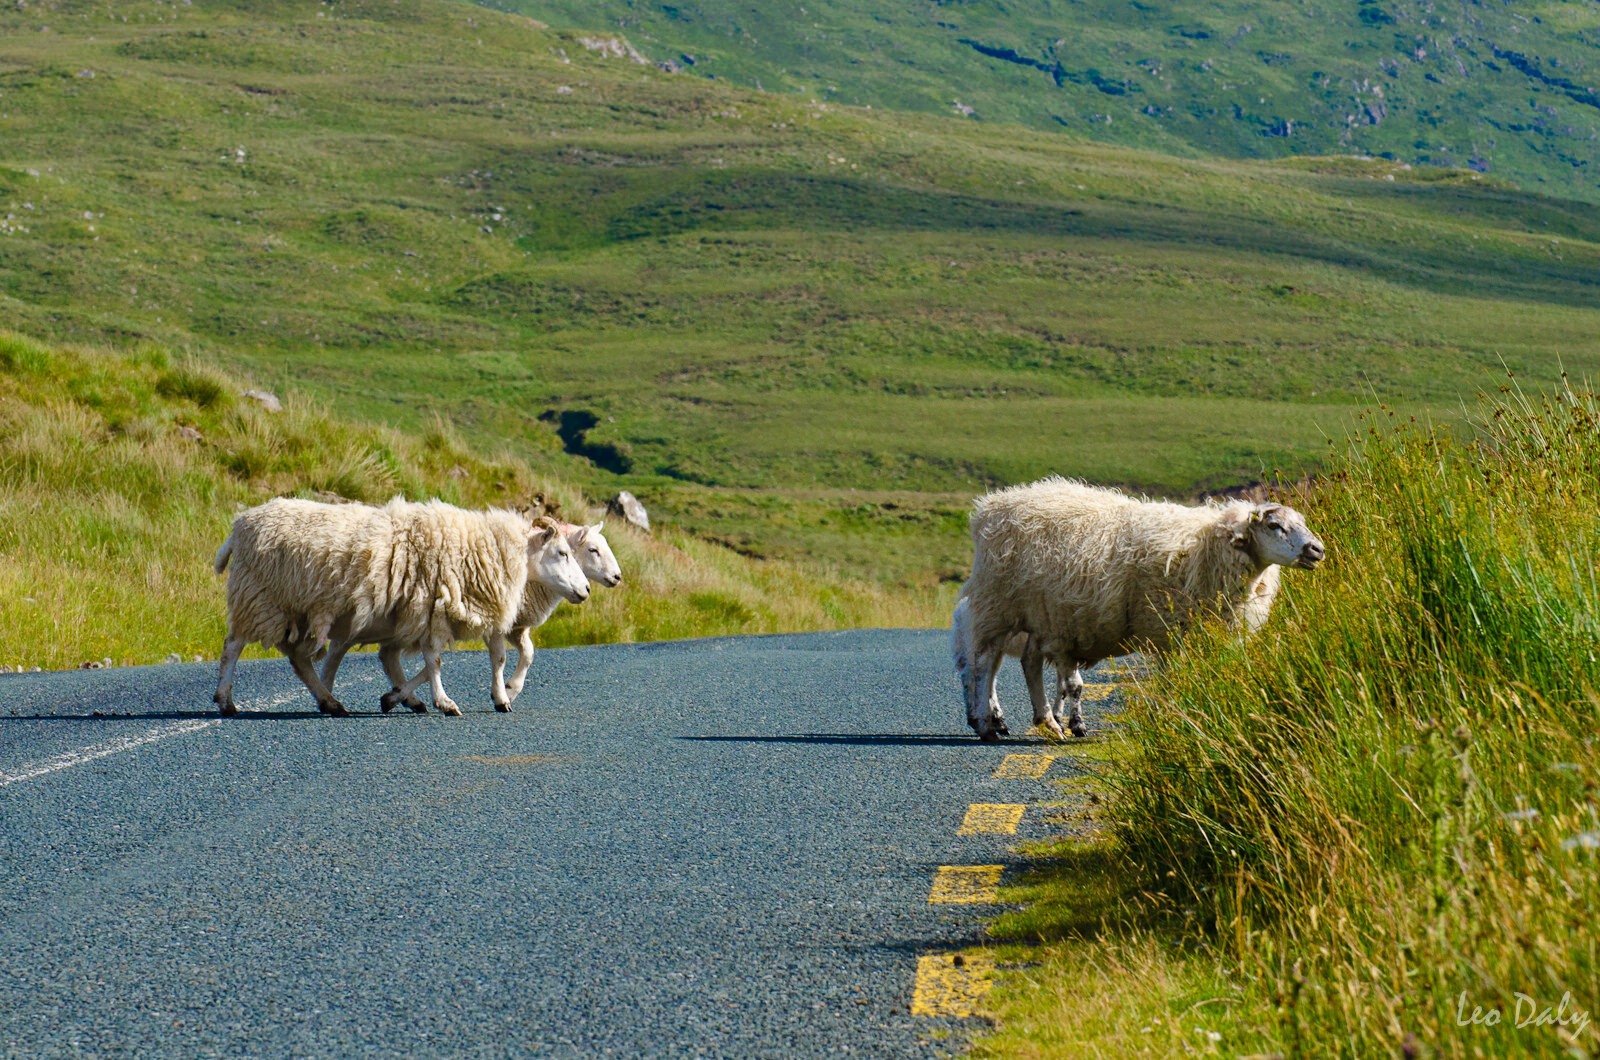 sheep on road 2.jpg